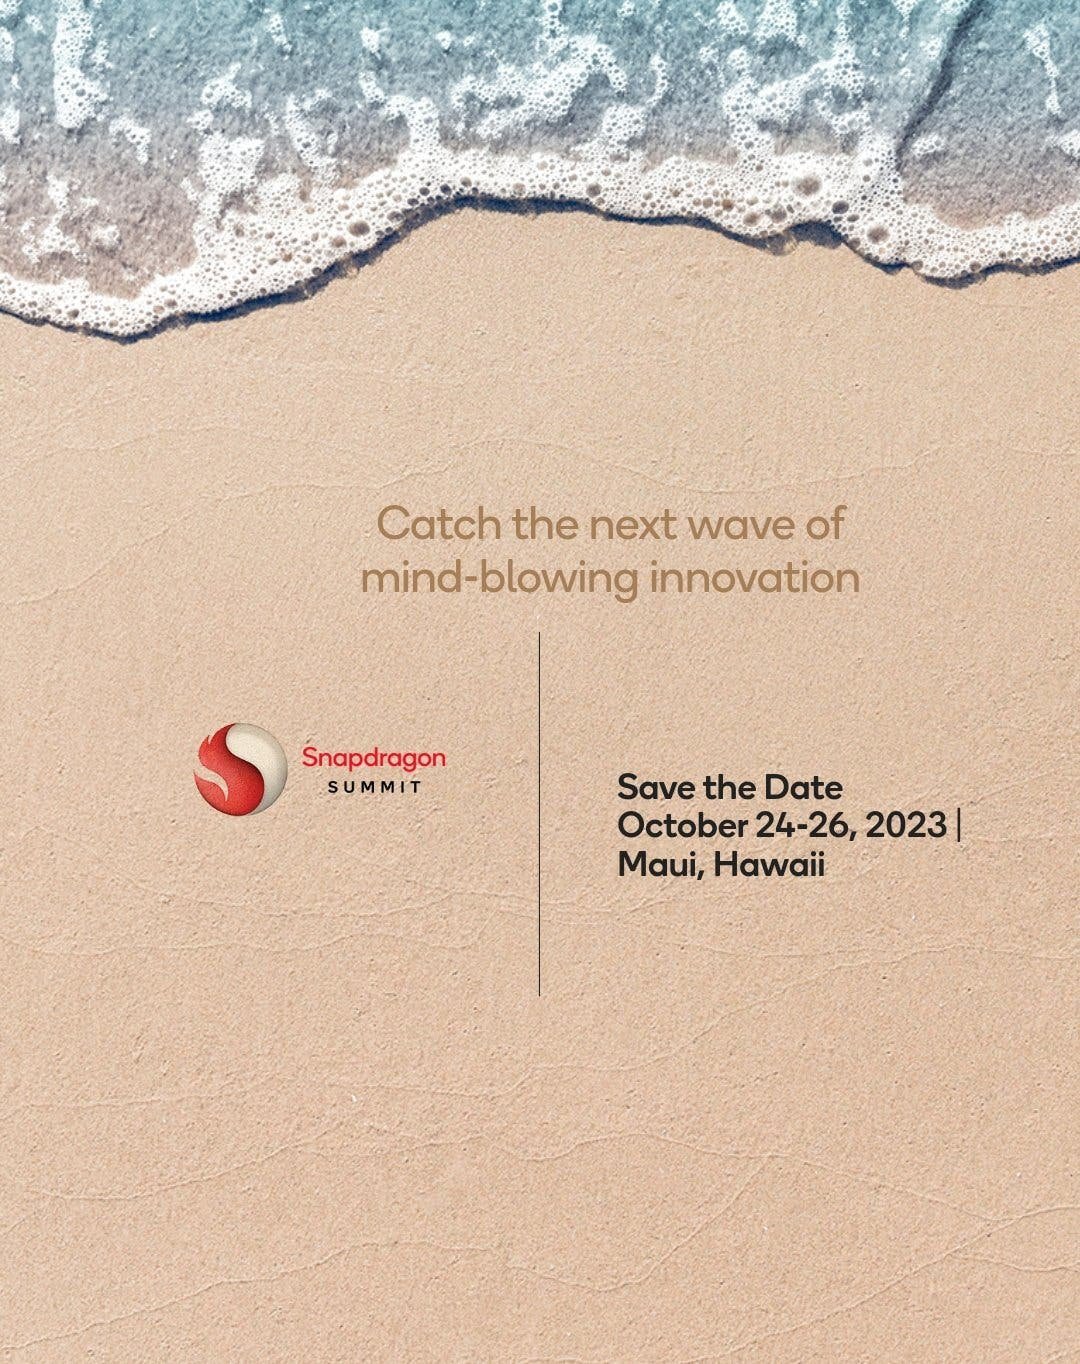 Cartaz promocional do Snapdragon Summit 2023.